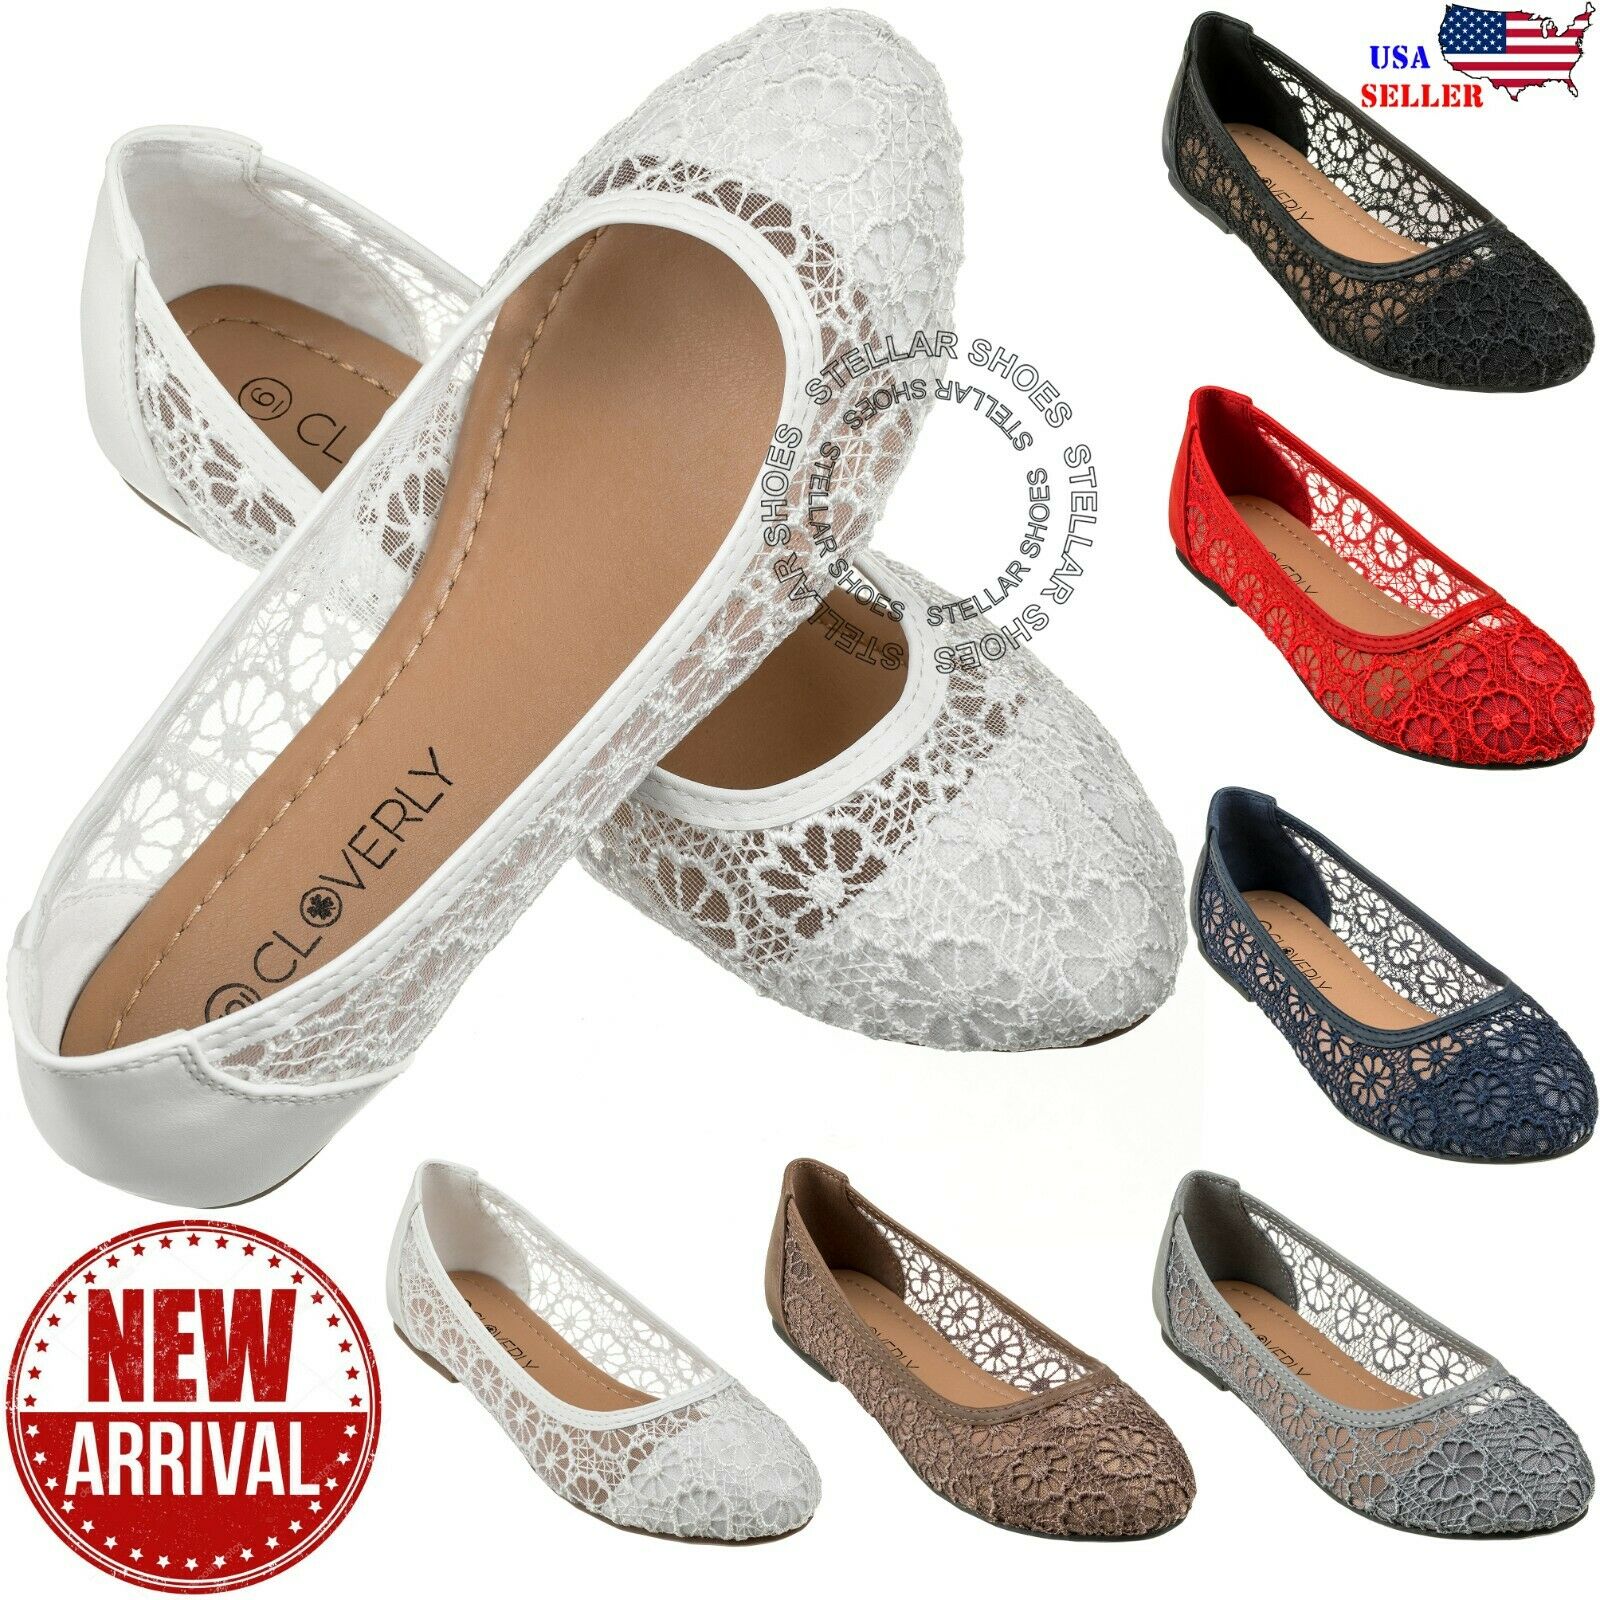 [new] Cloverlay Women's Lace Flats Crochet Ballet Slip On Ballerina Shoes